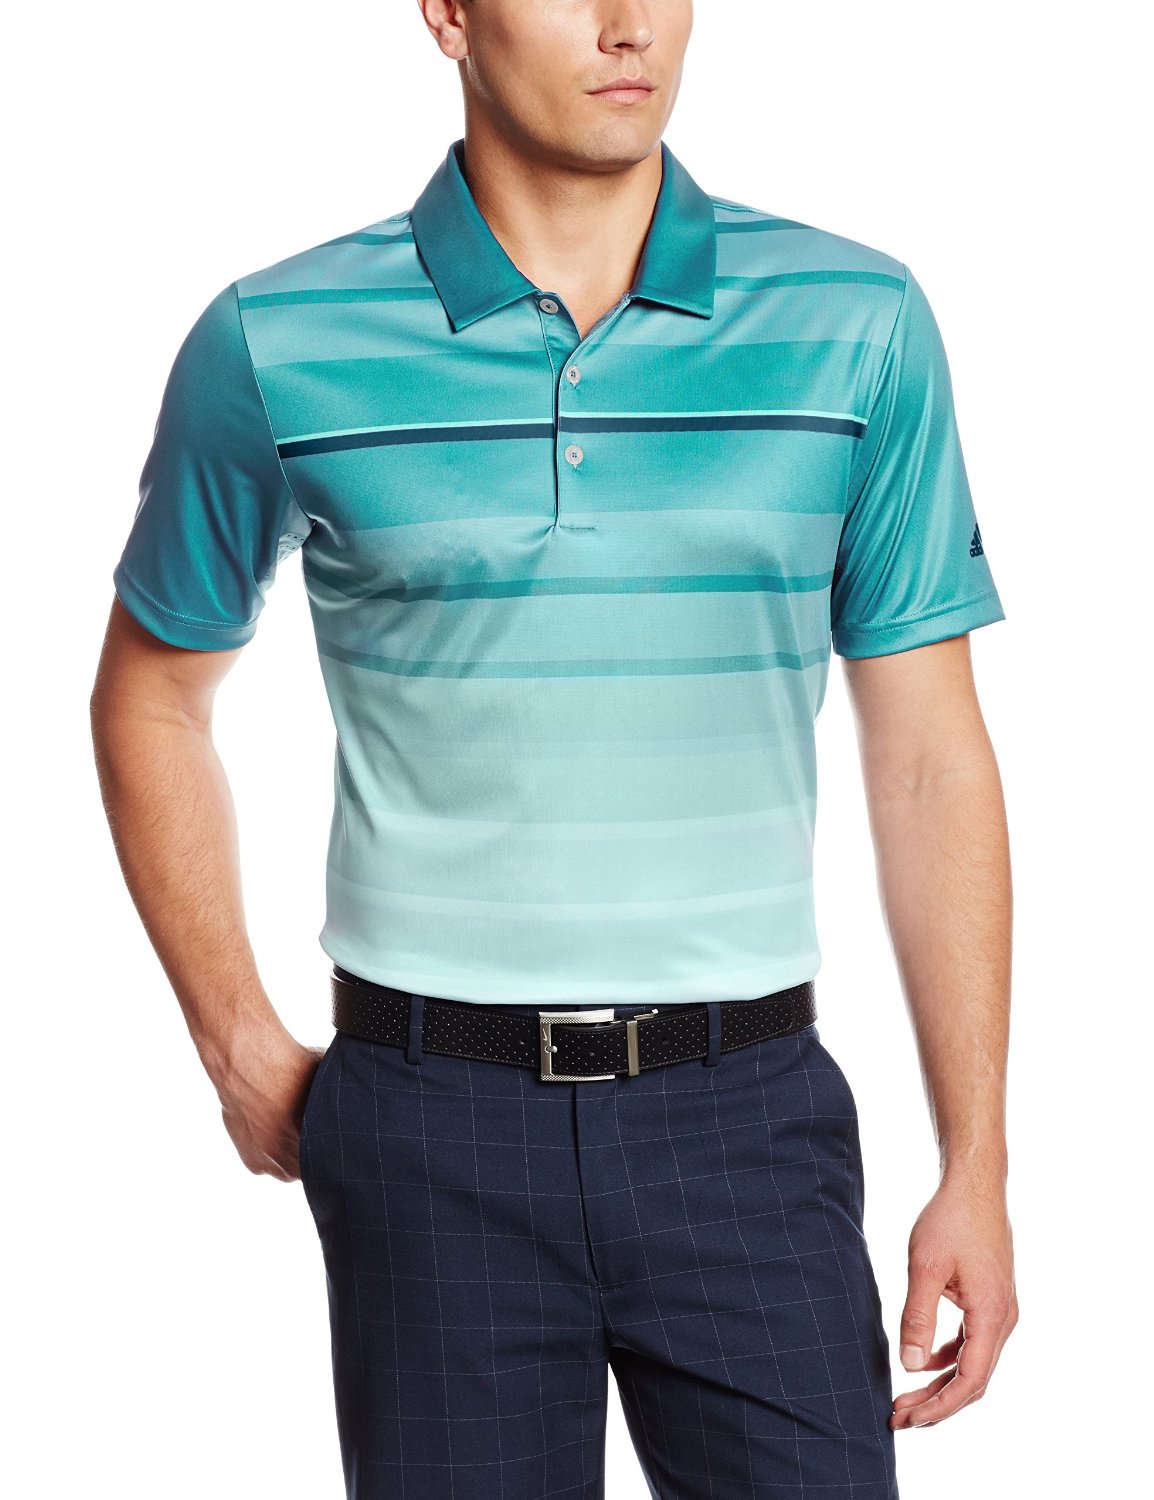 Adidas Mens Puremotion Climacool Gradient Block Tour Golf Polo Shirts